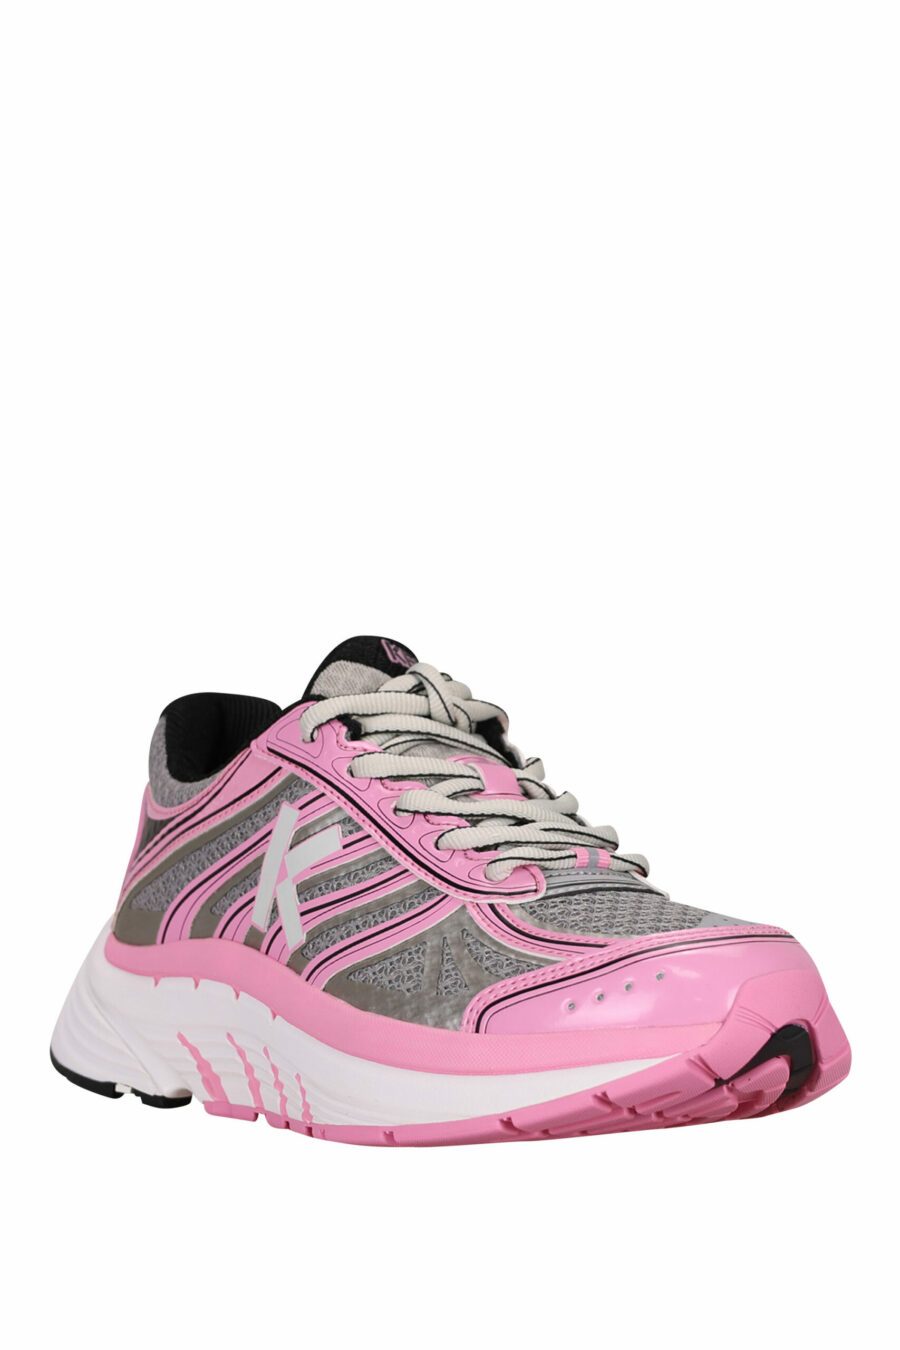 Zapatillas grises con rosa "kenzo tech runner" - 3612230548671 1 scaled